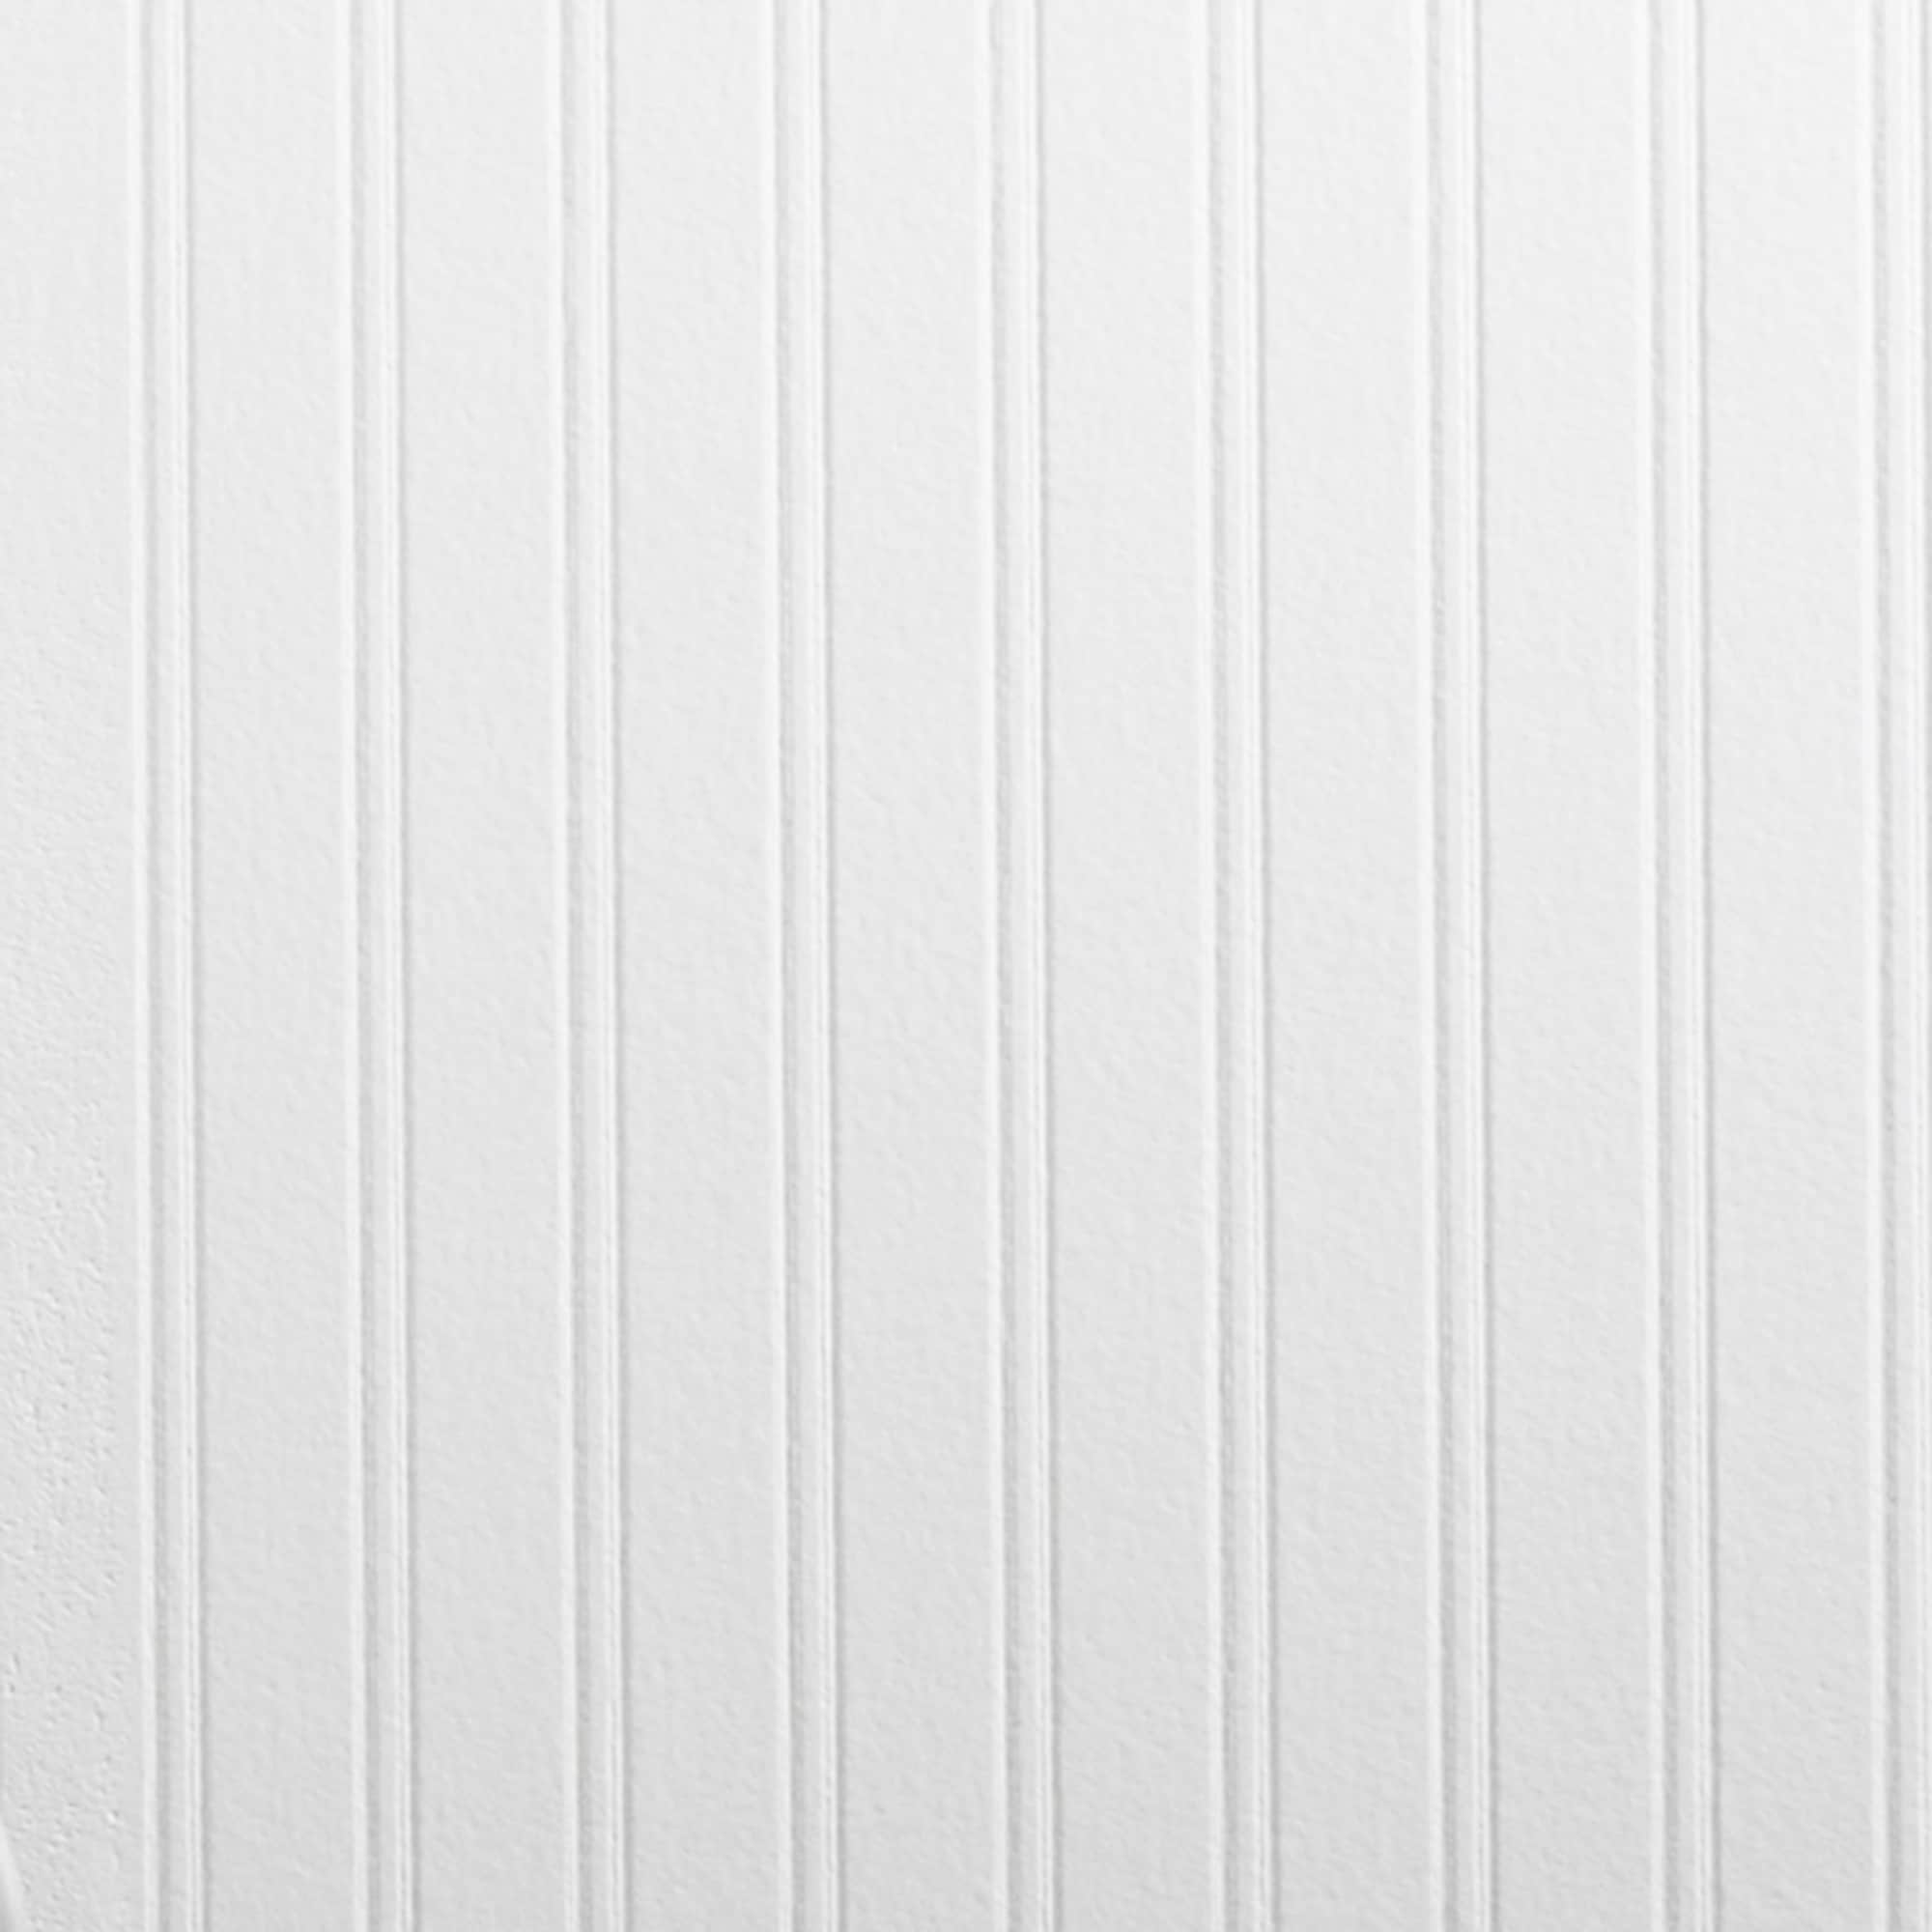 RoomMates Blue Wood Look Beadboard Peel  Stick Wallpaper  Walmartcom